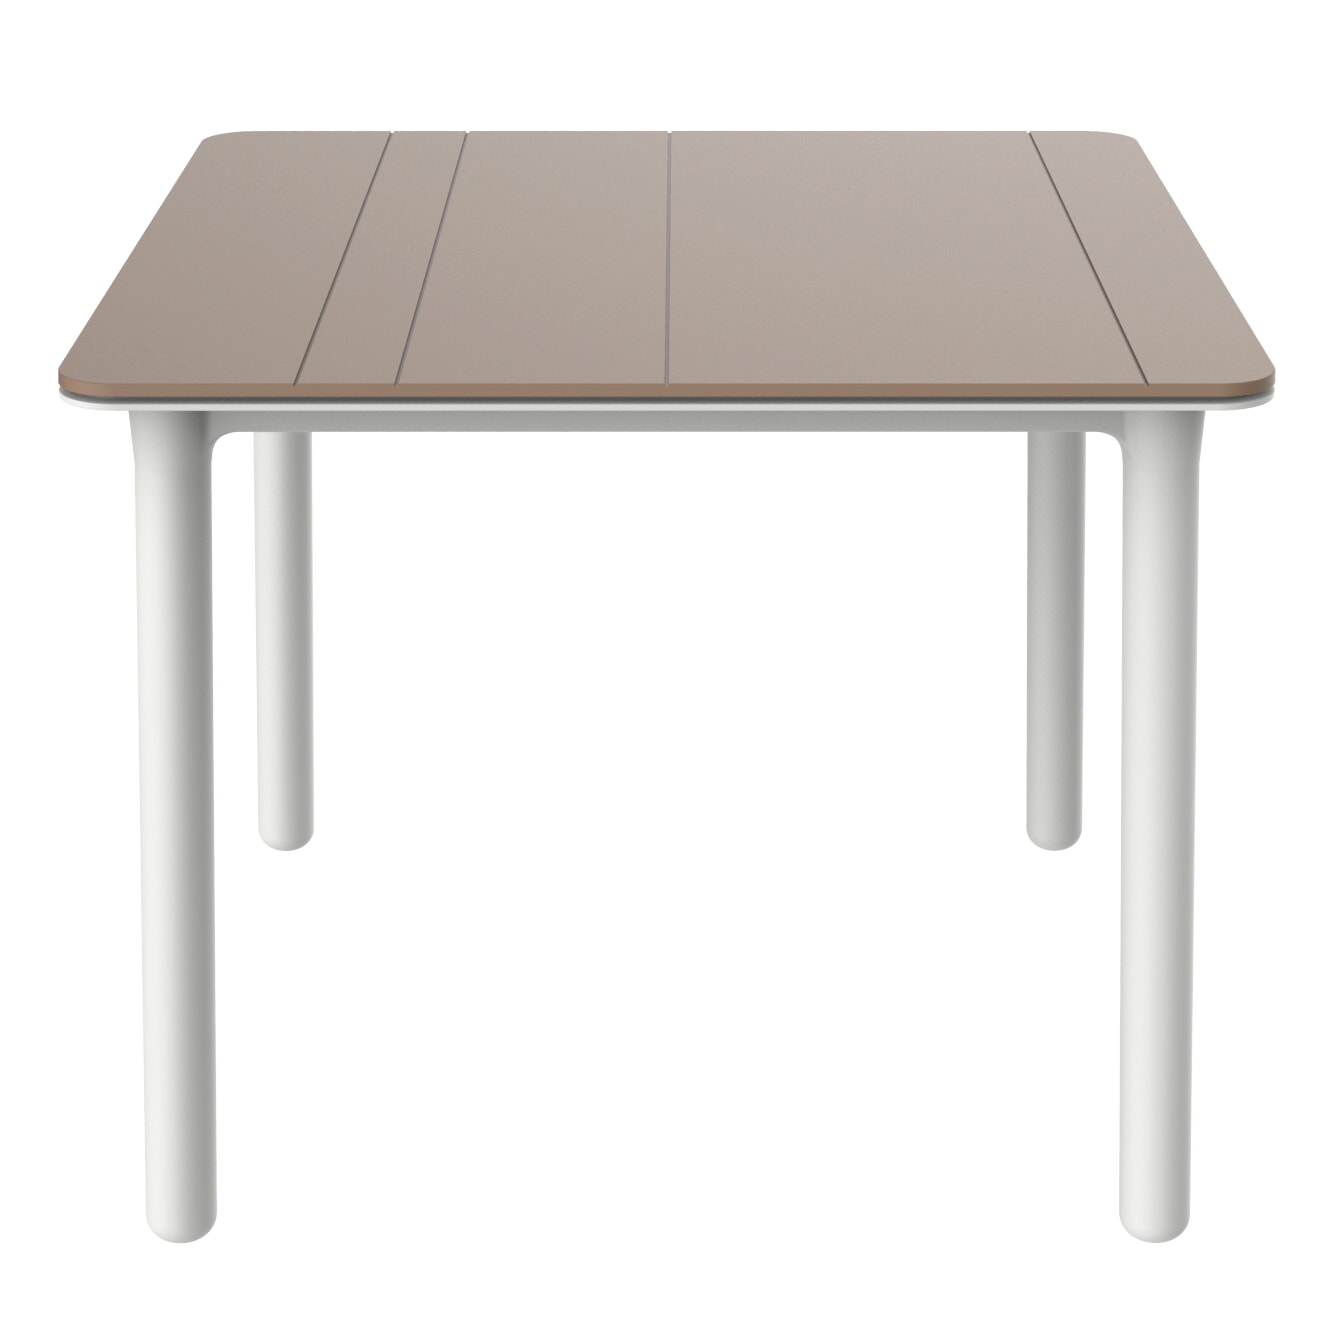 Noa vierkante tafel 90x90 wit voet zandkleurplank